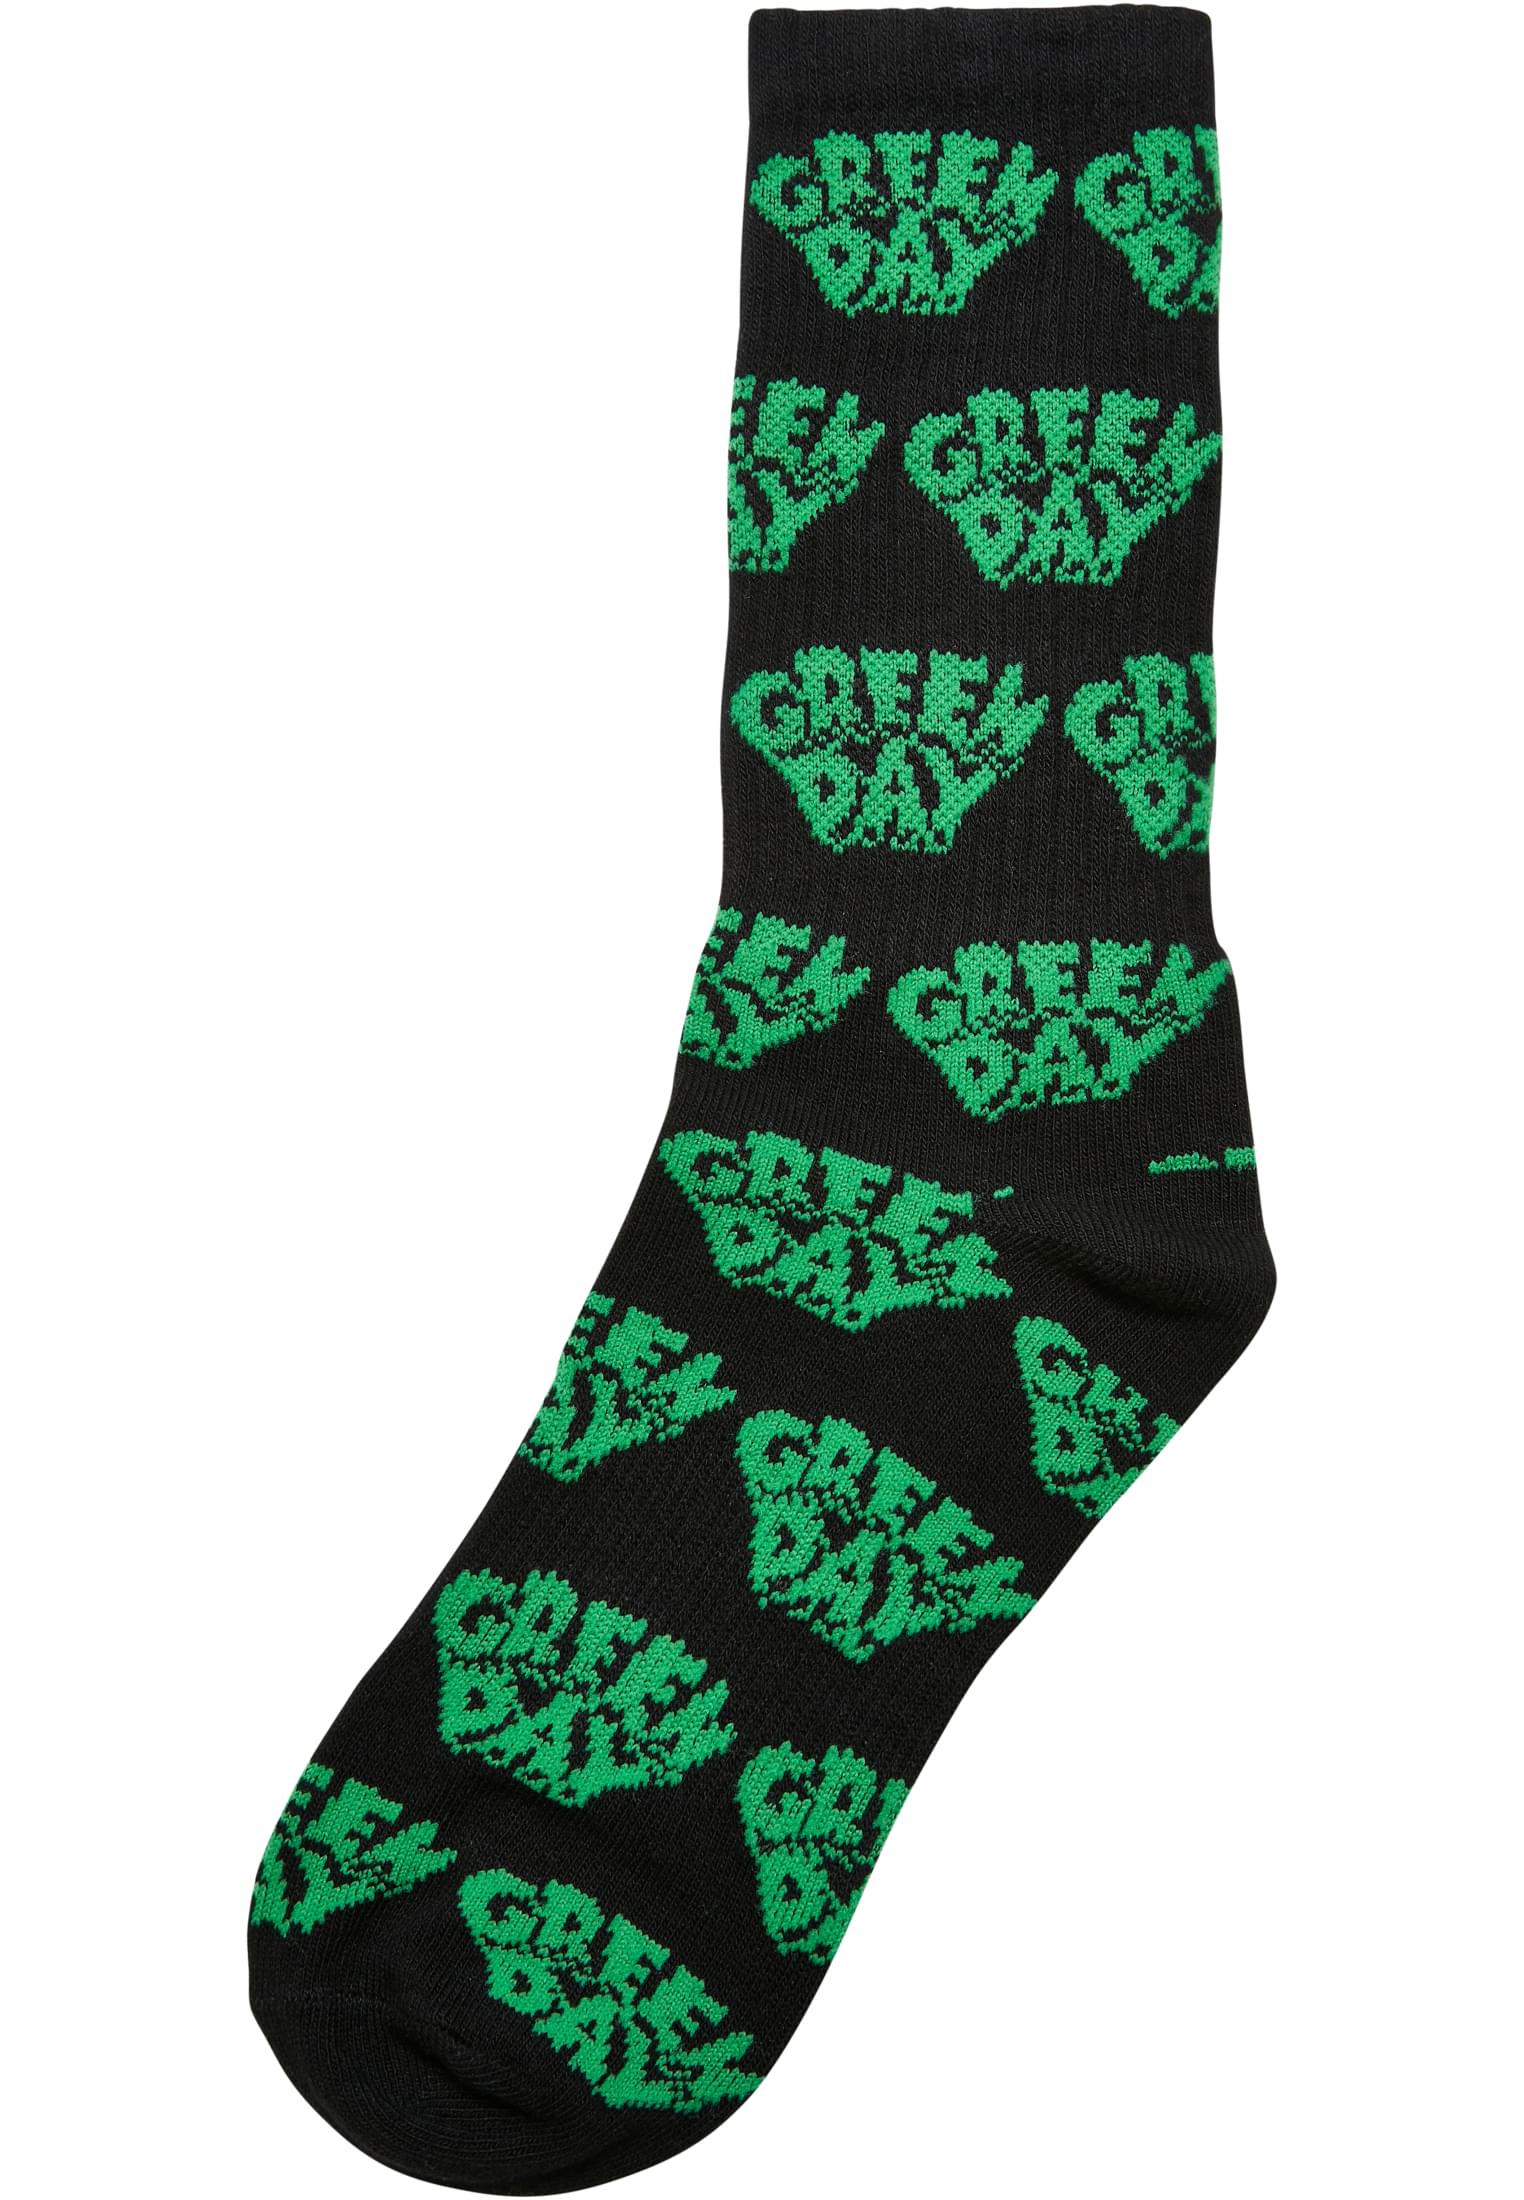 Accessoires Green Day Socks 2-Pack in Farbe black/white